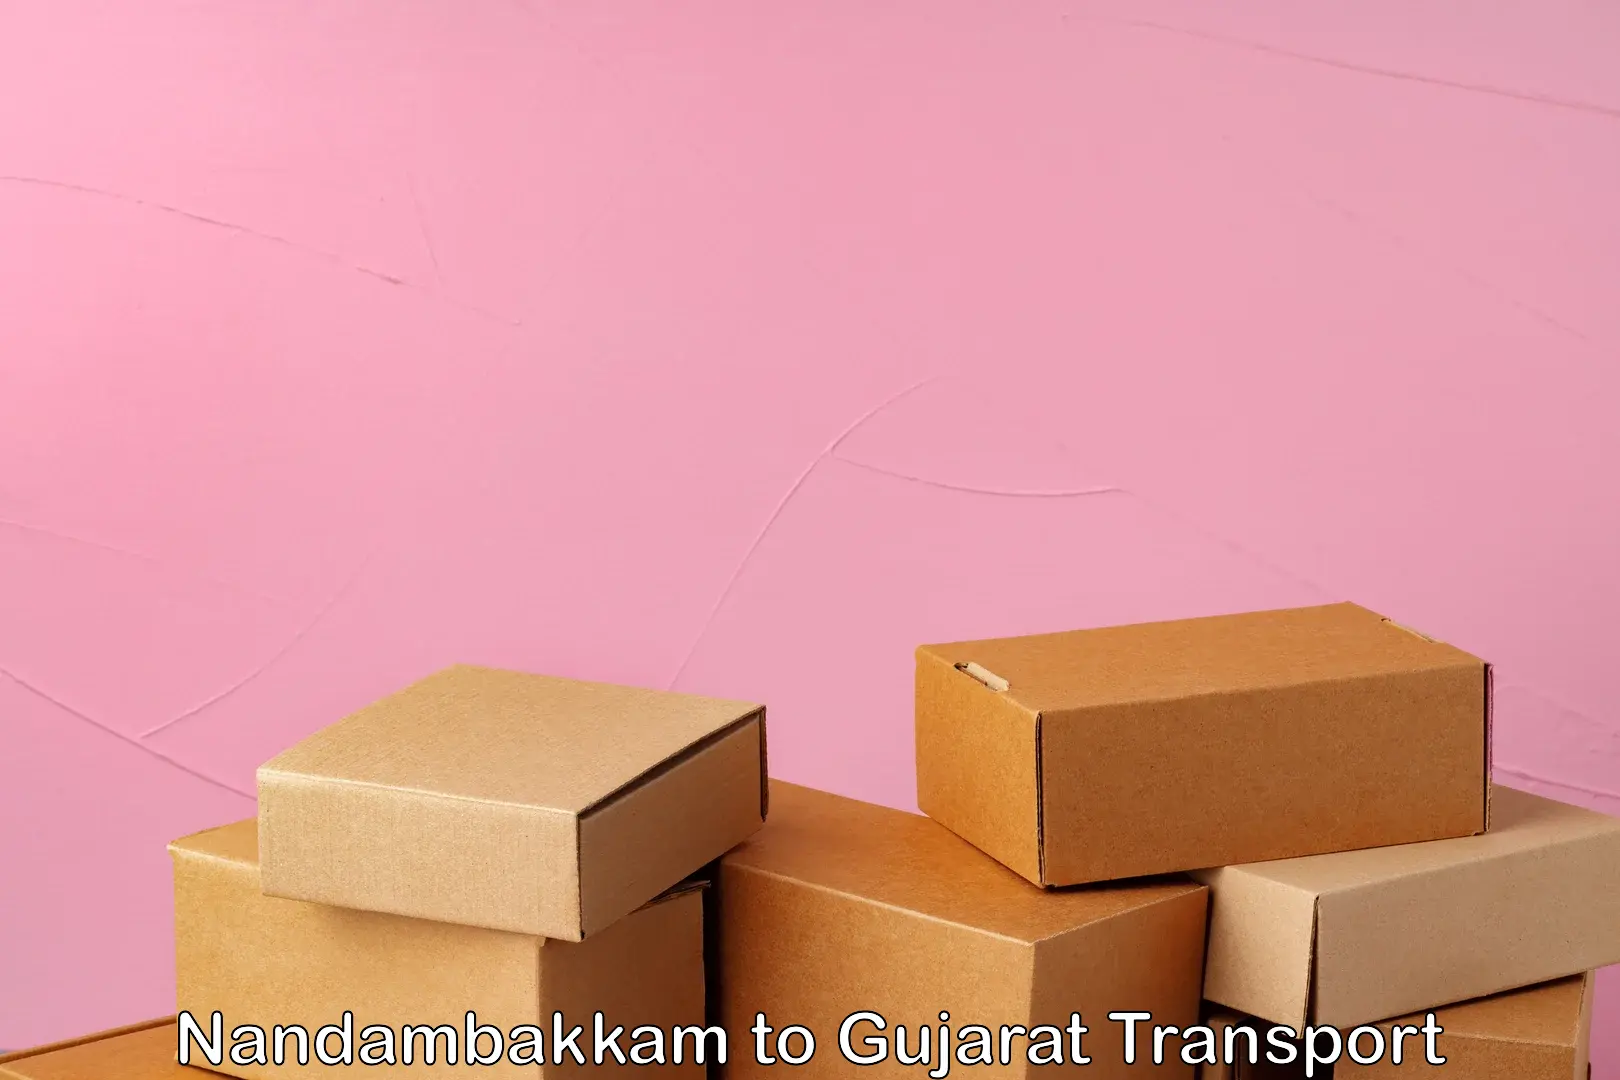 Truck transport companies in India Nandambakkam to Gujarat